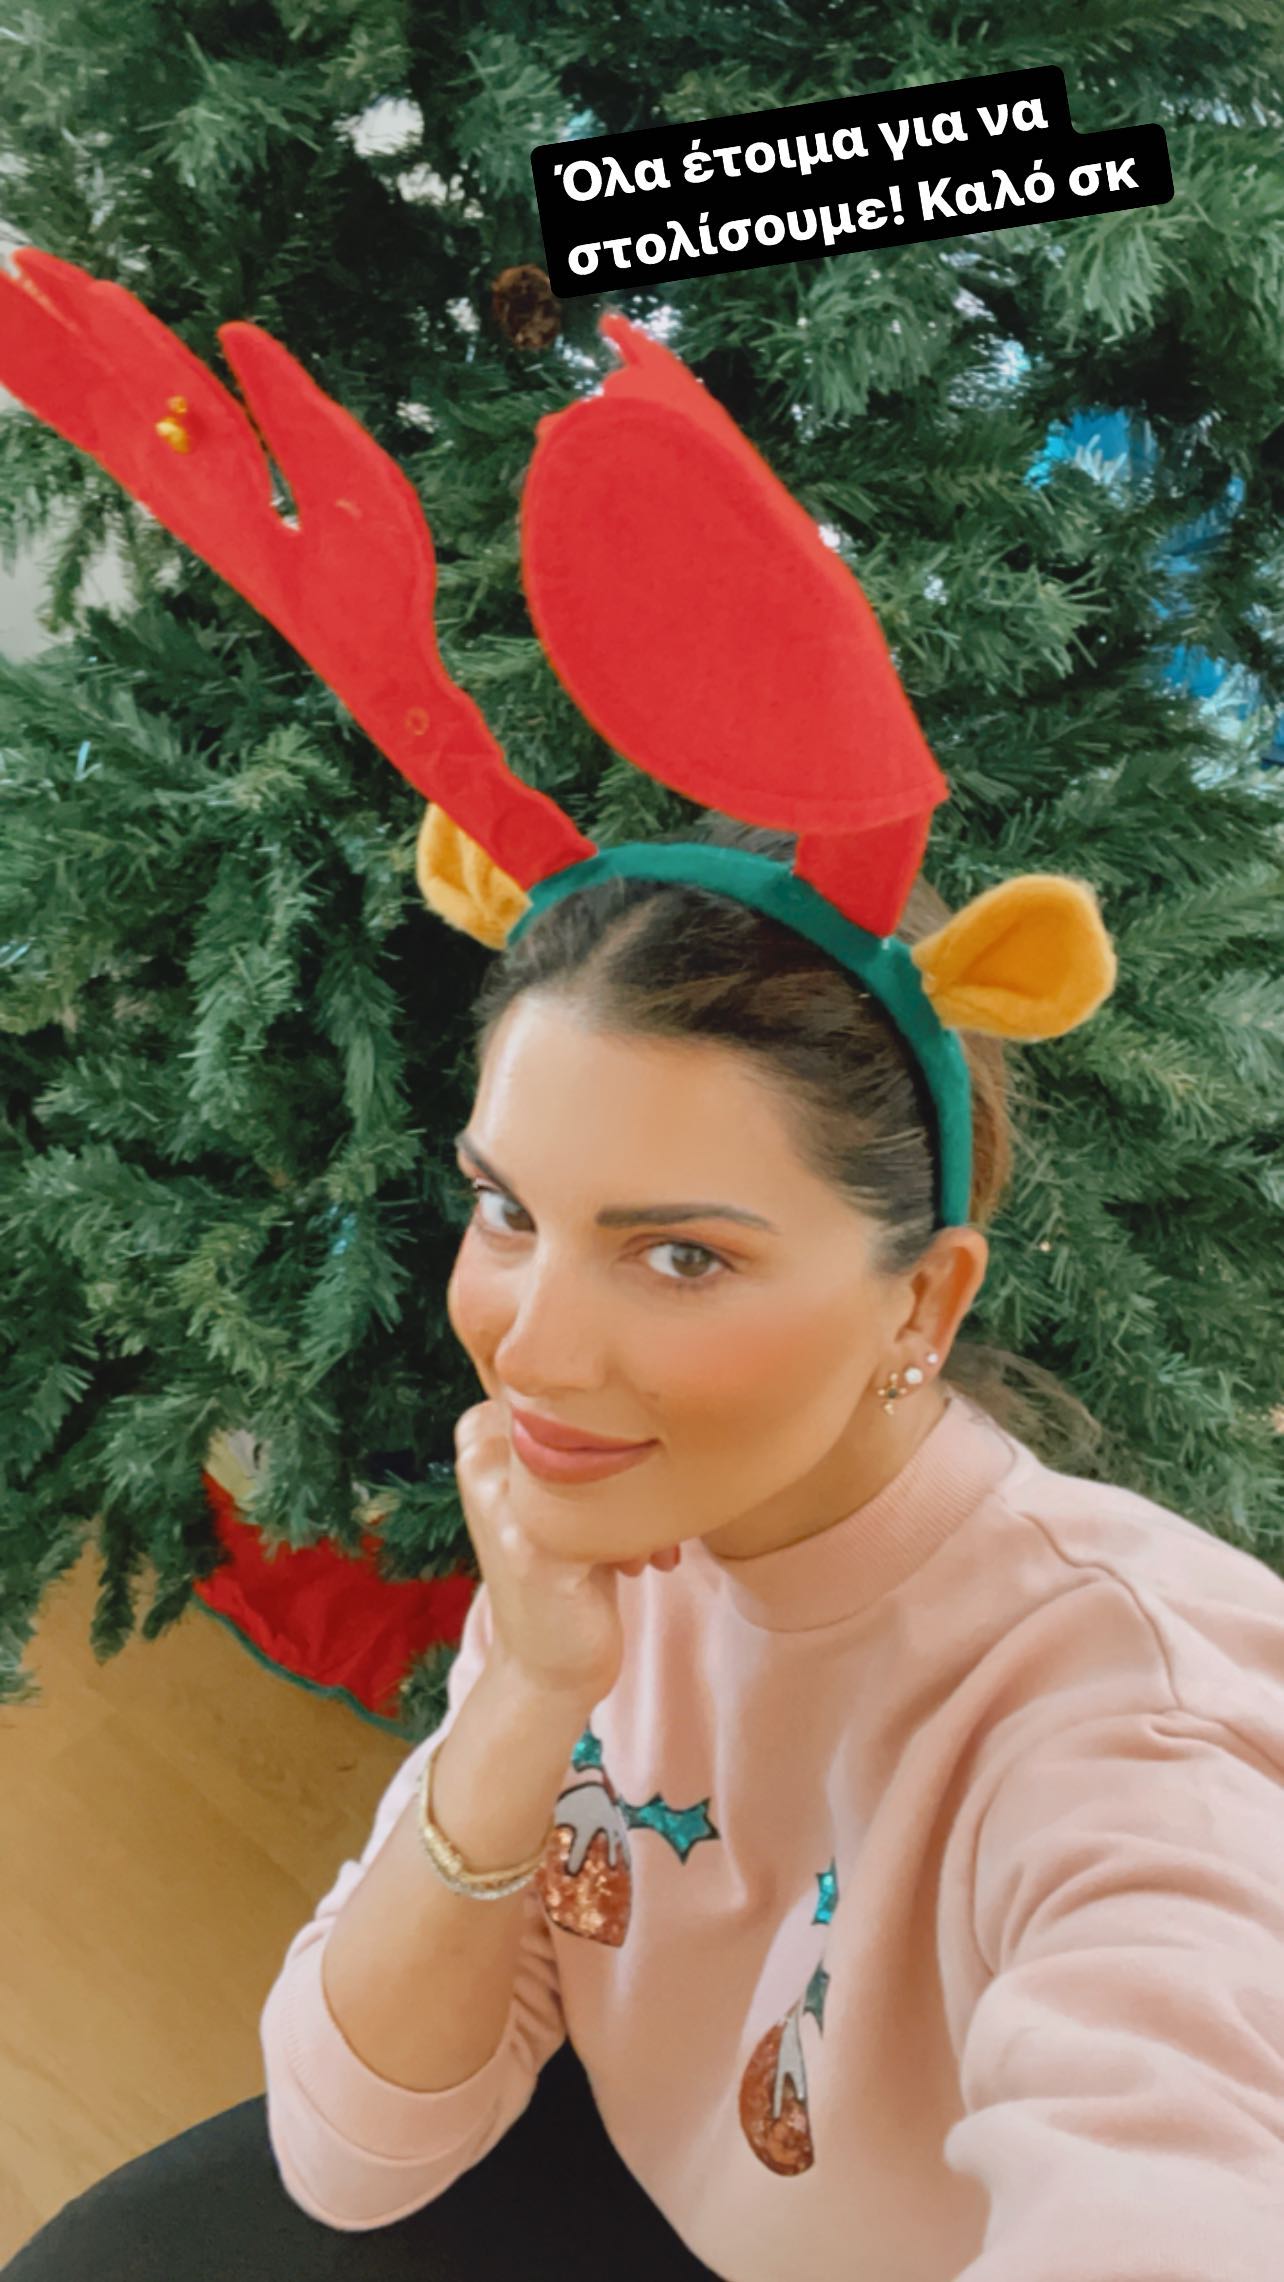 H Σταματίνα Τσιμτσιλή στόλισε μαζί με τα παιδιά της το χριστουγεννιάτικο δέντρο! (εικόνες)